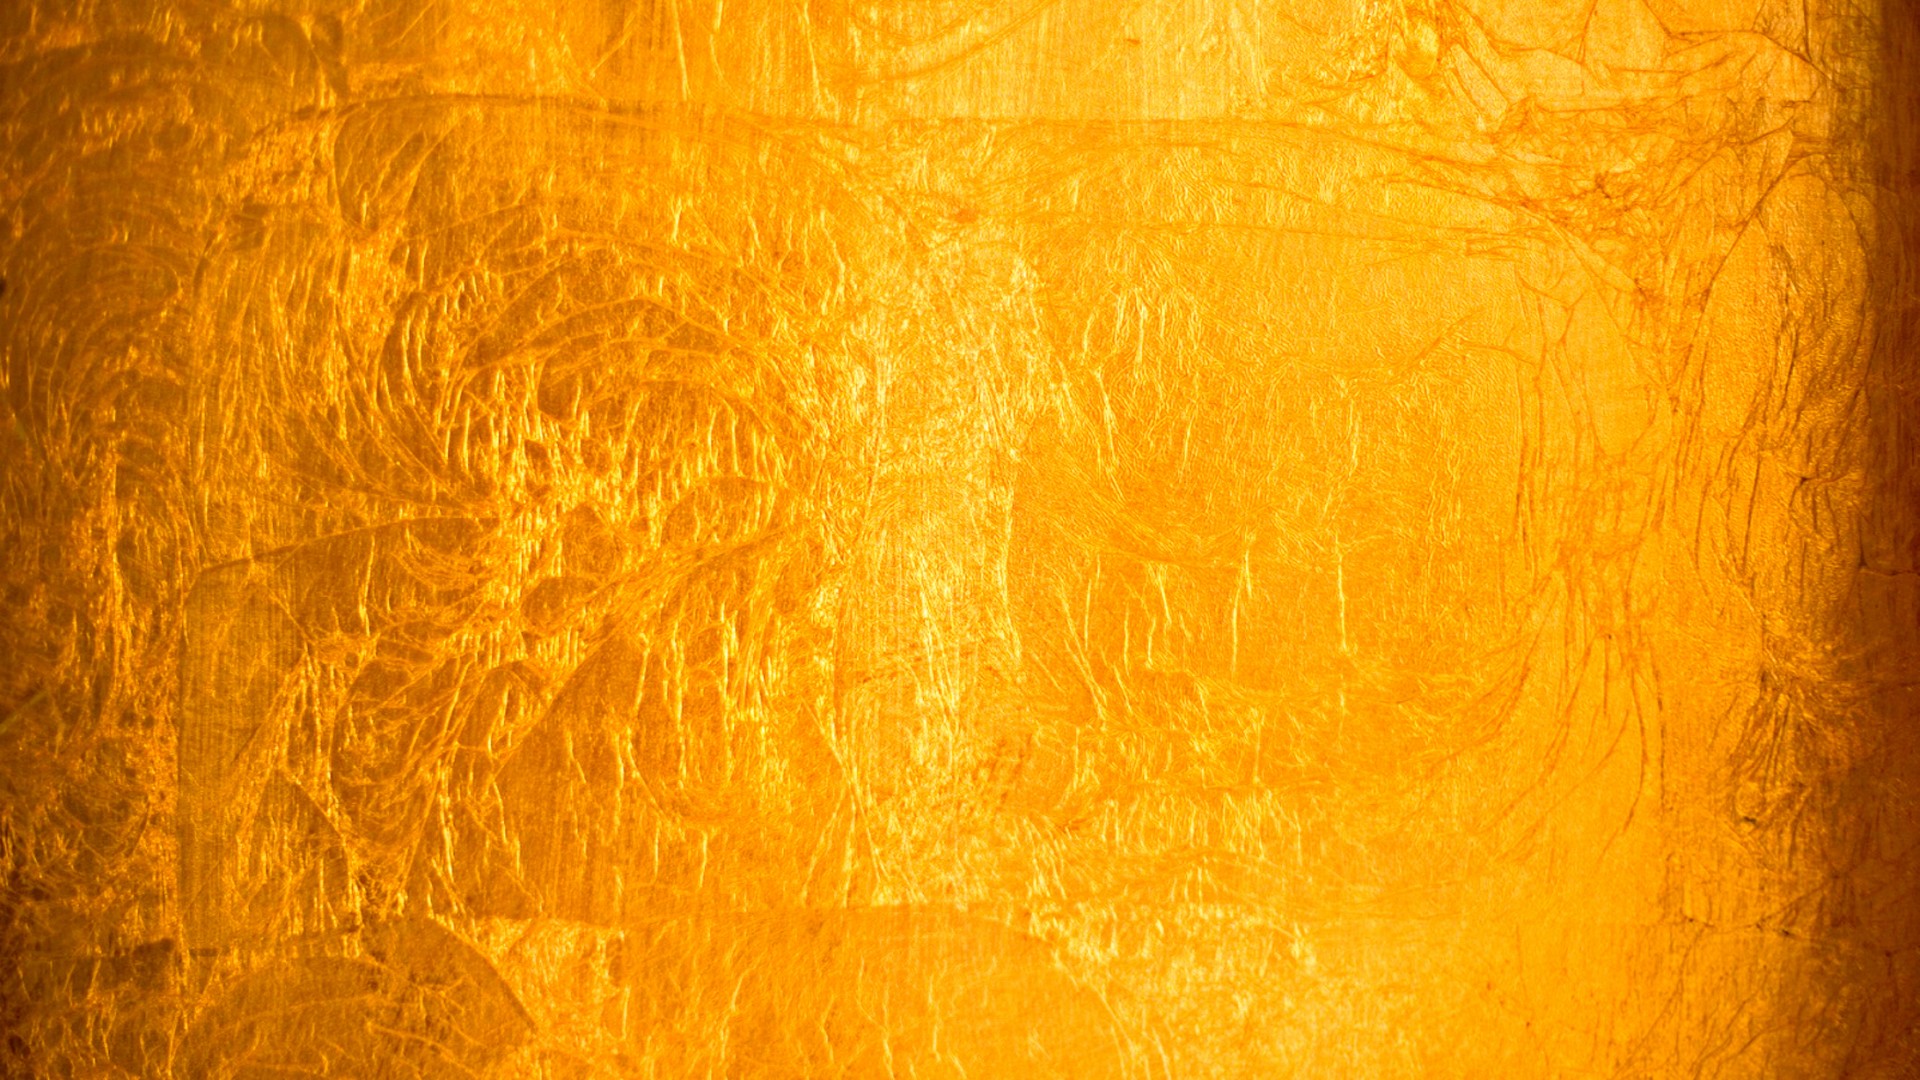 plain gold wallpaper,orange,yellow,amber